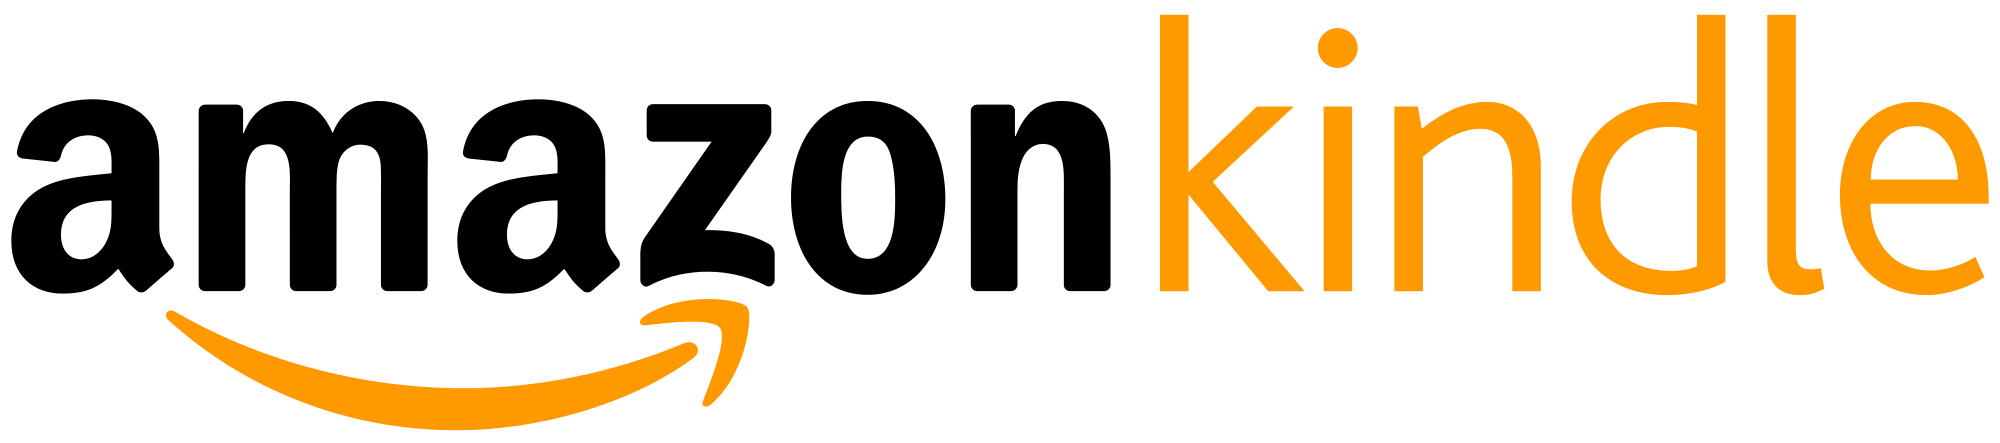 logo-kindle.png